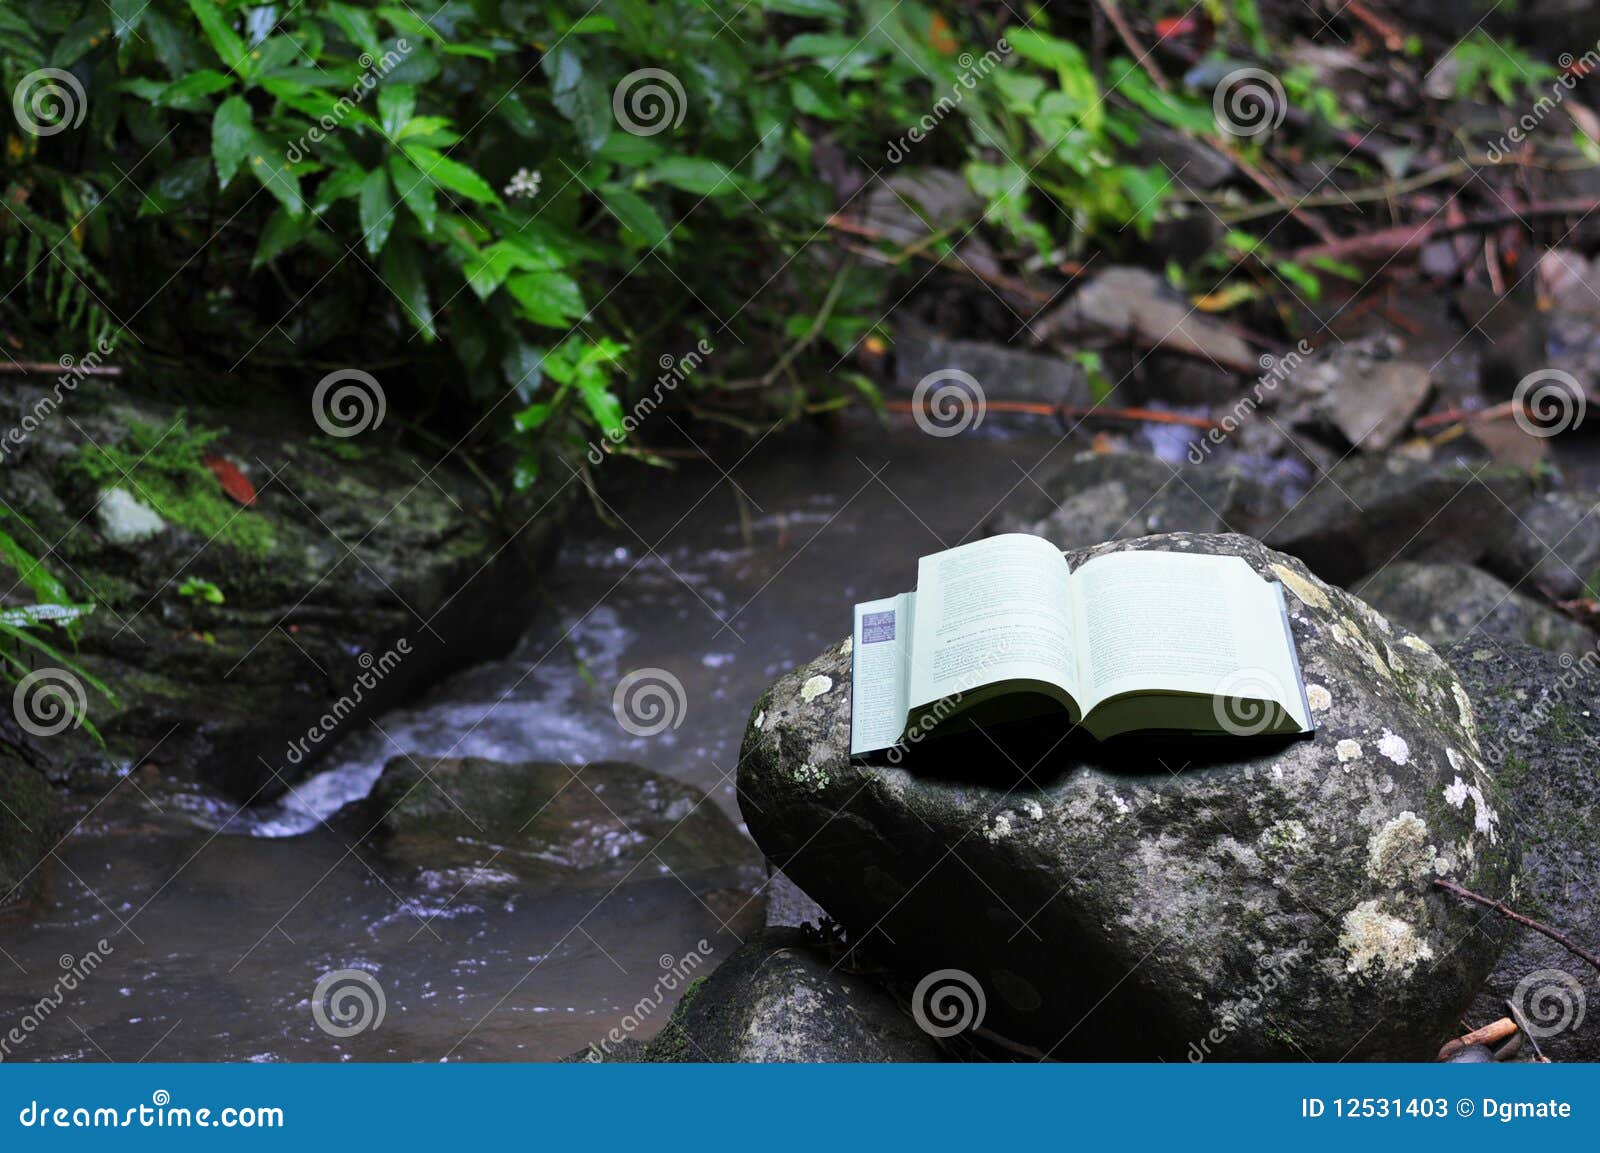 book in rainforest